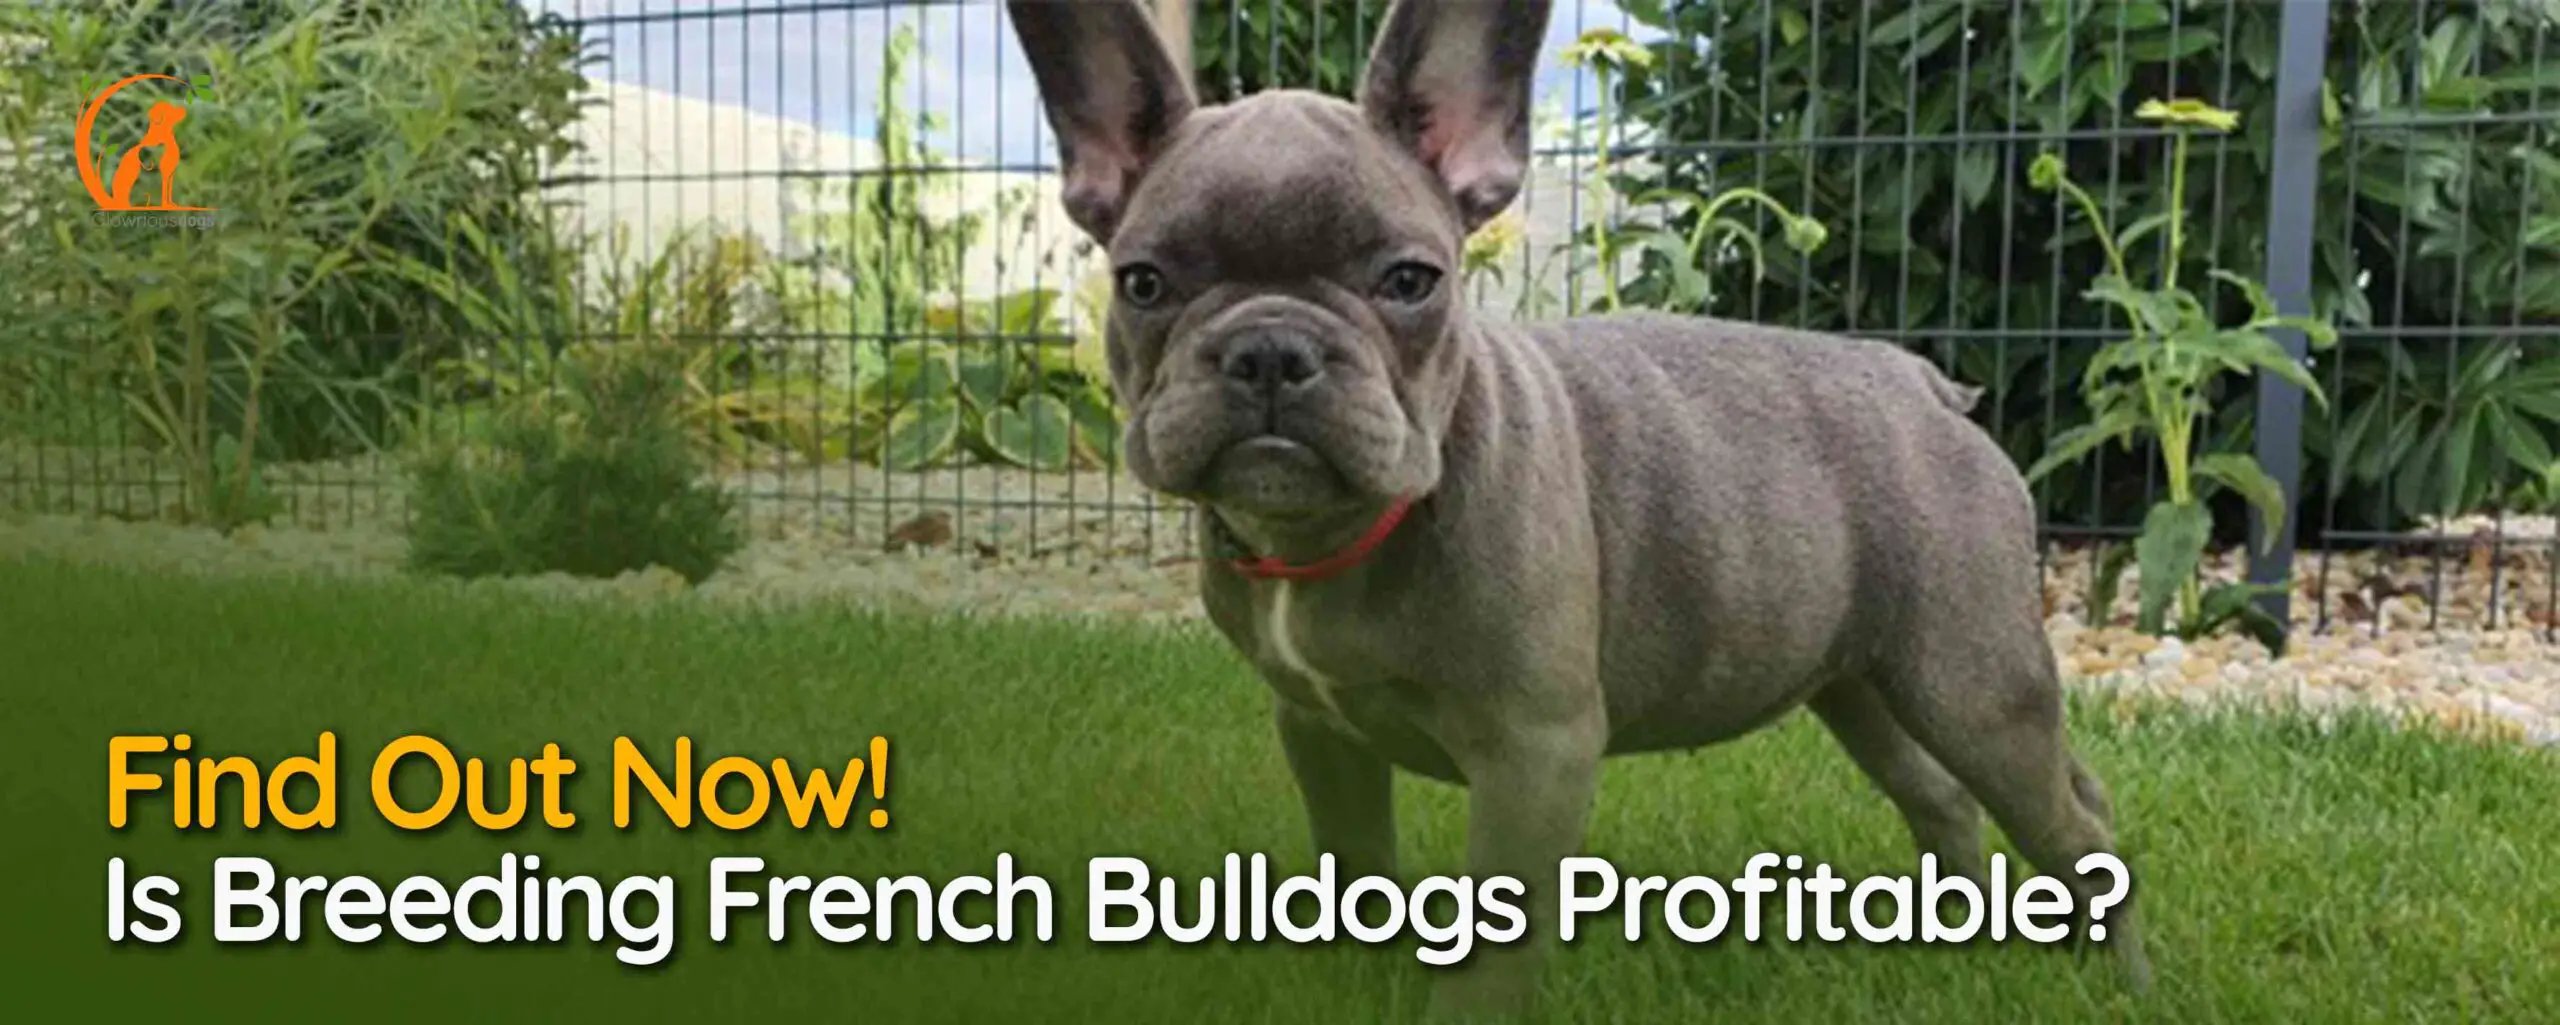 Is Breeding French Bulldogs Profitable